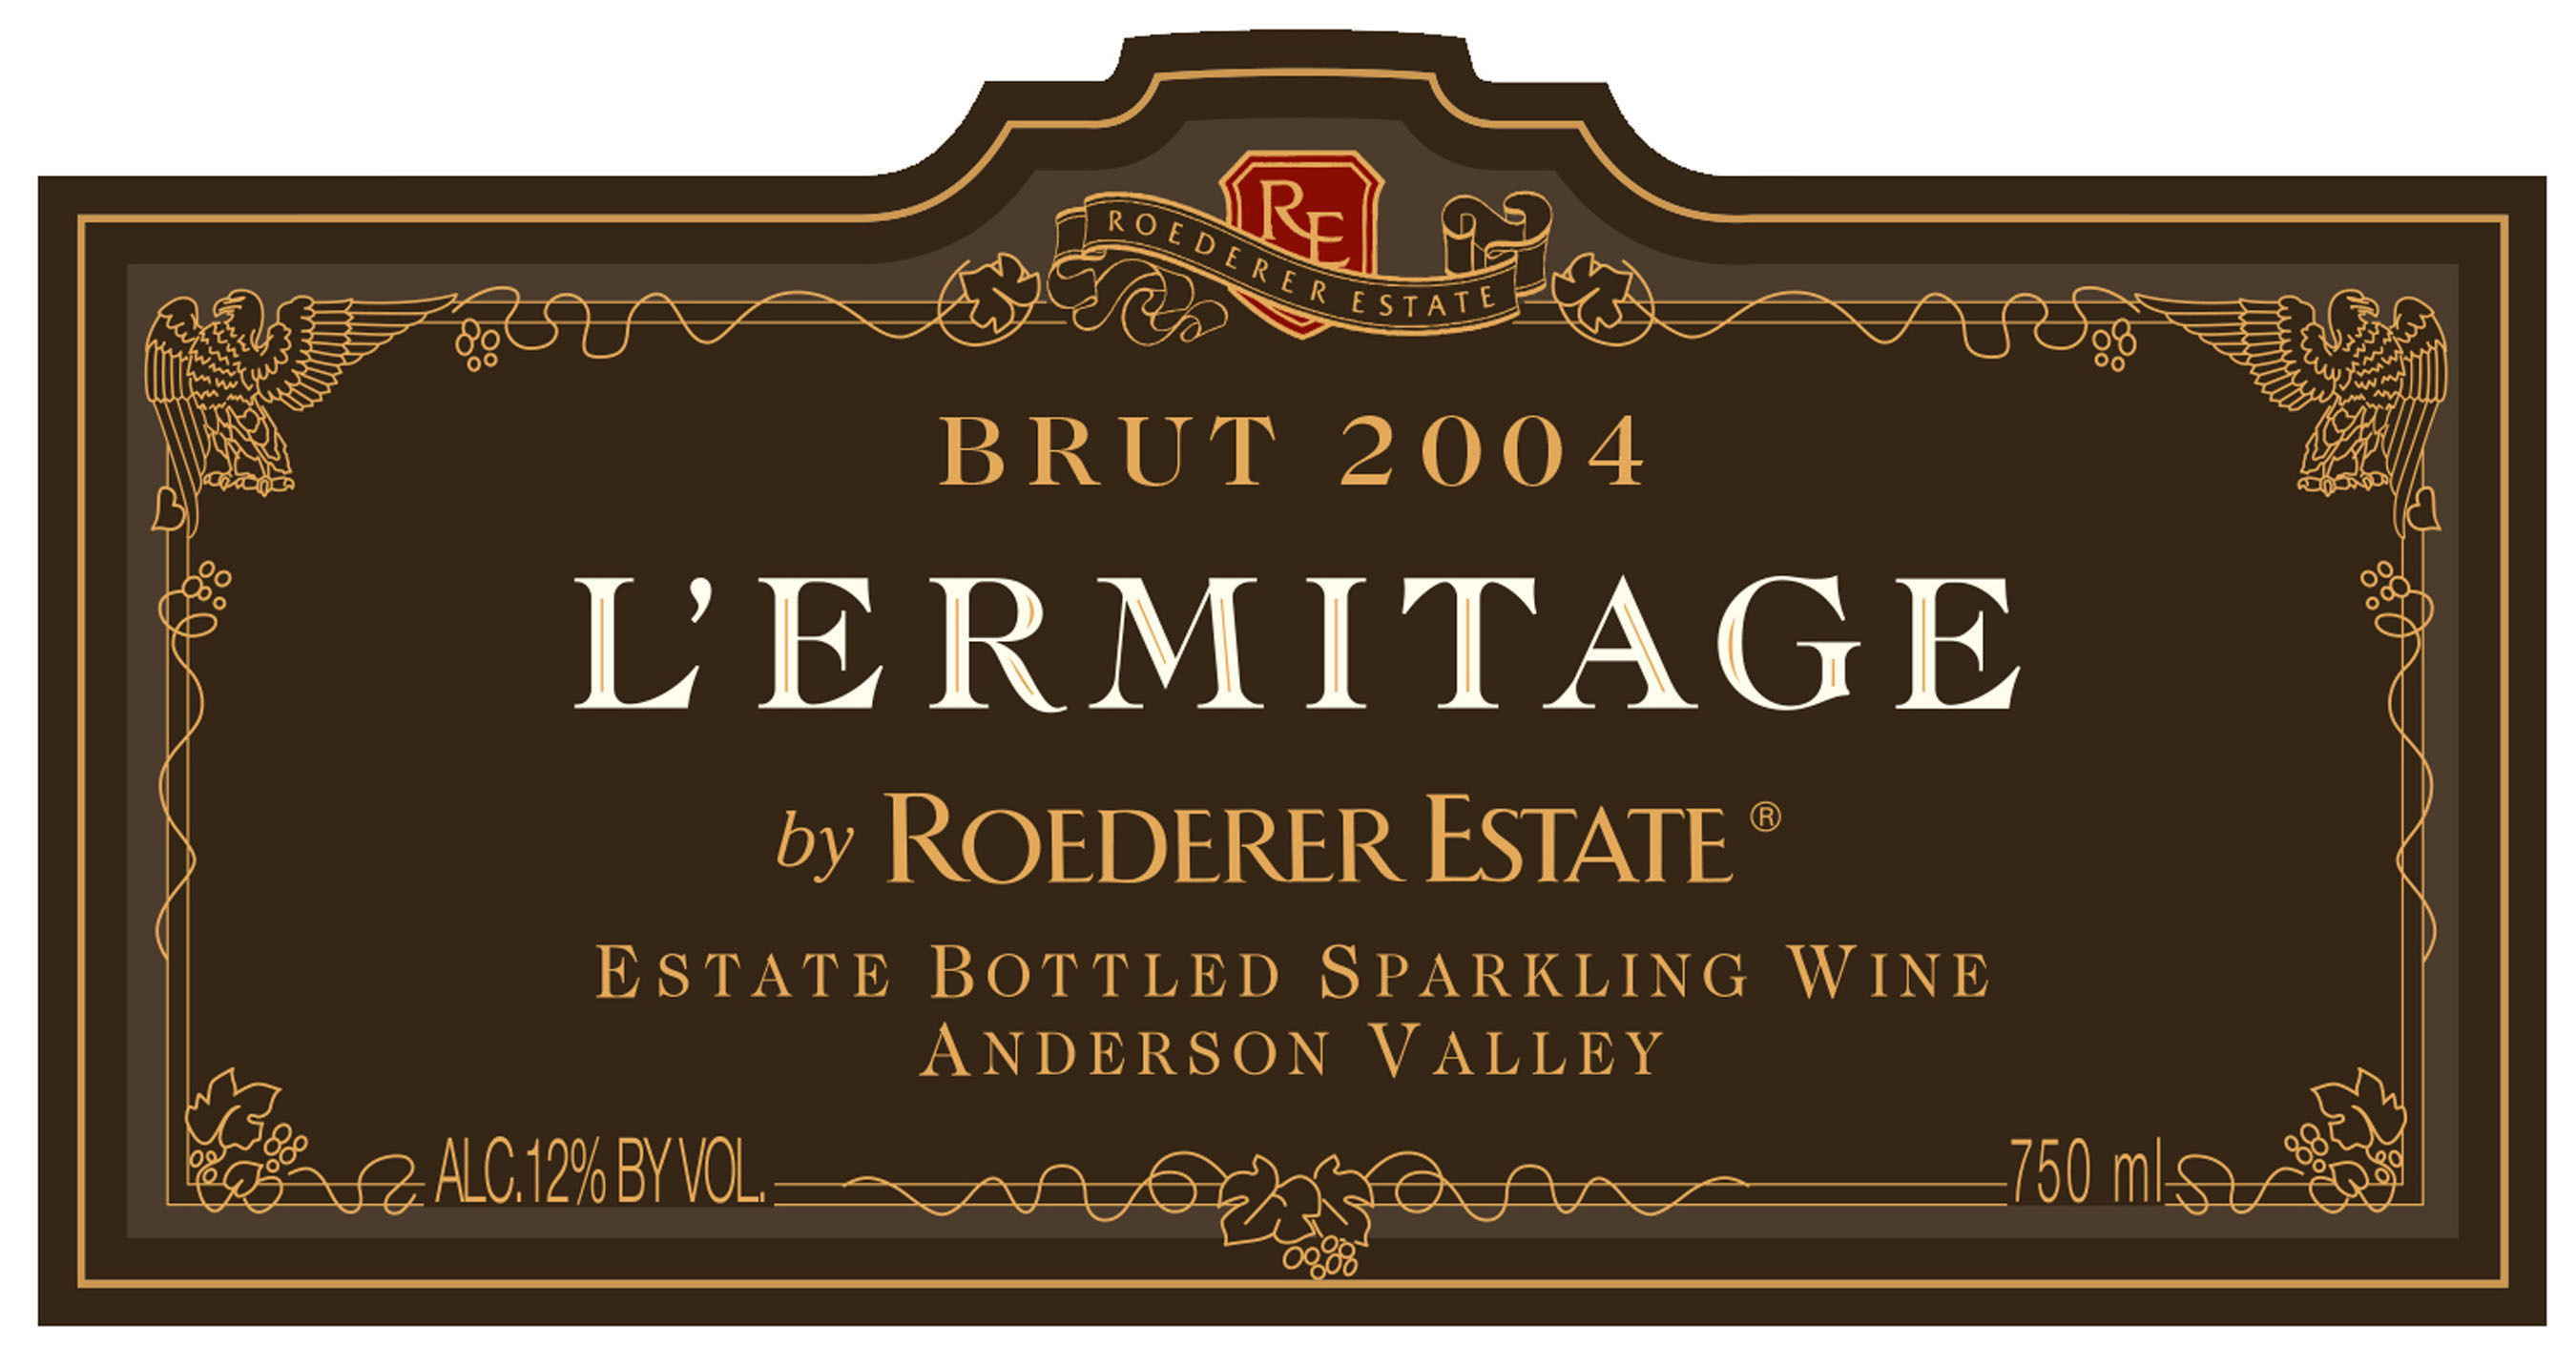 Roederer Estate L'Ermitage 2004 Named #1 on Wine Enthusiast Magazine's Top 100 List 2013. (PRNewsFoto/Maisons Marques & Domaines USA Inc.) (PRNewsFoto/MAISONS MARQUES & DOMAINES ...)